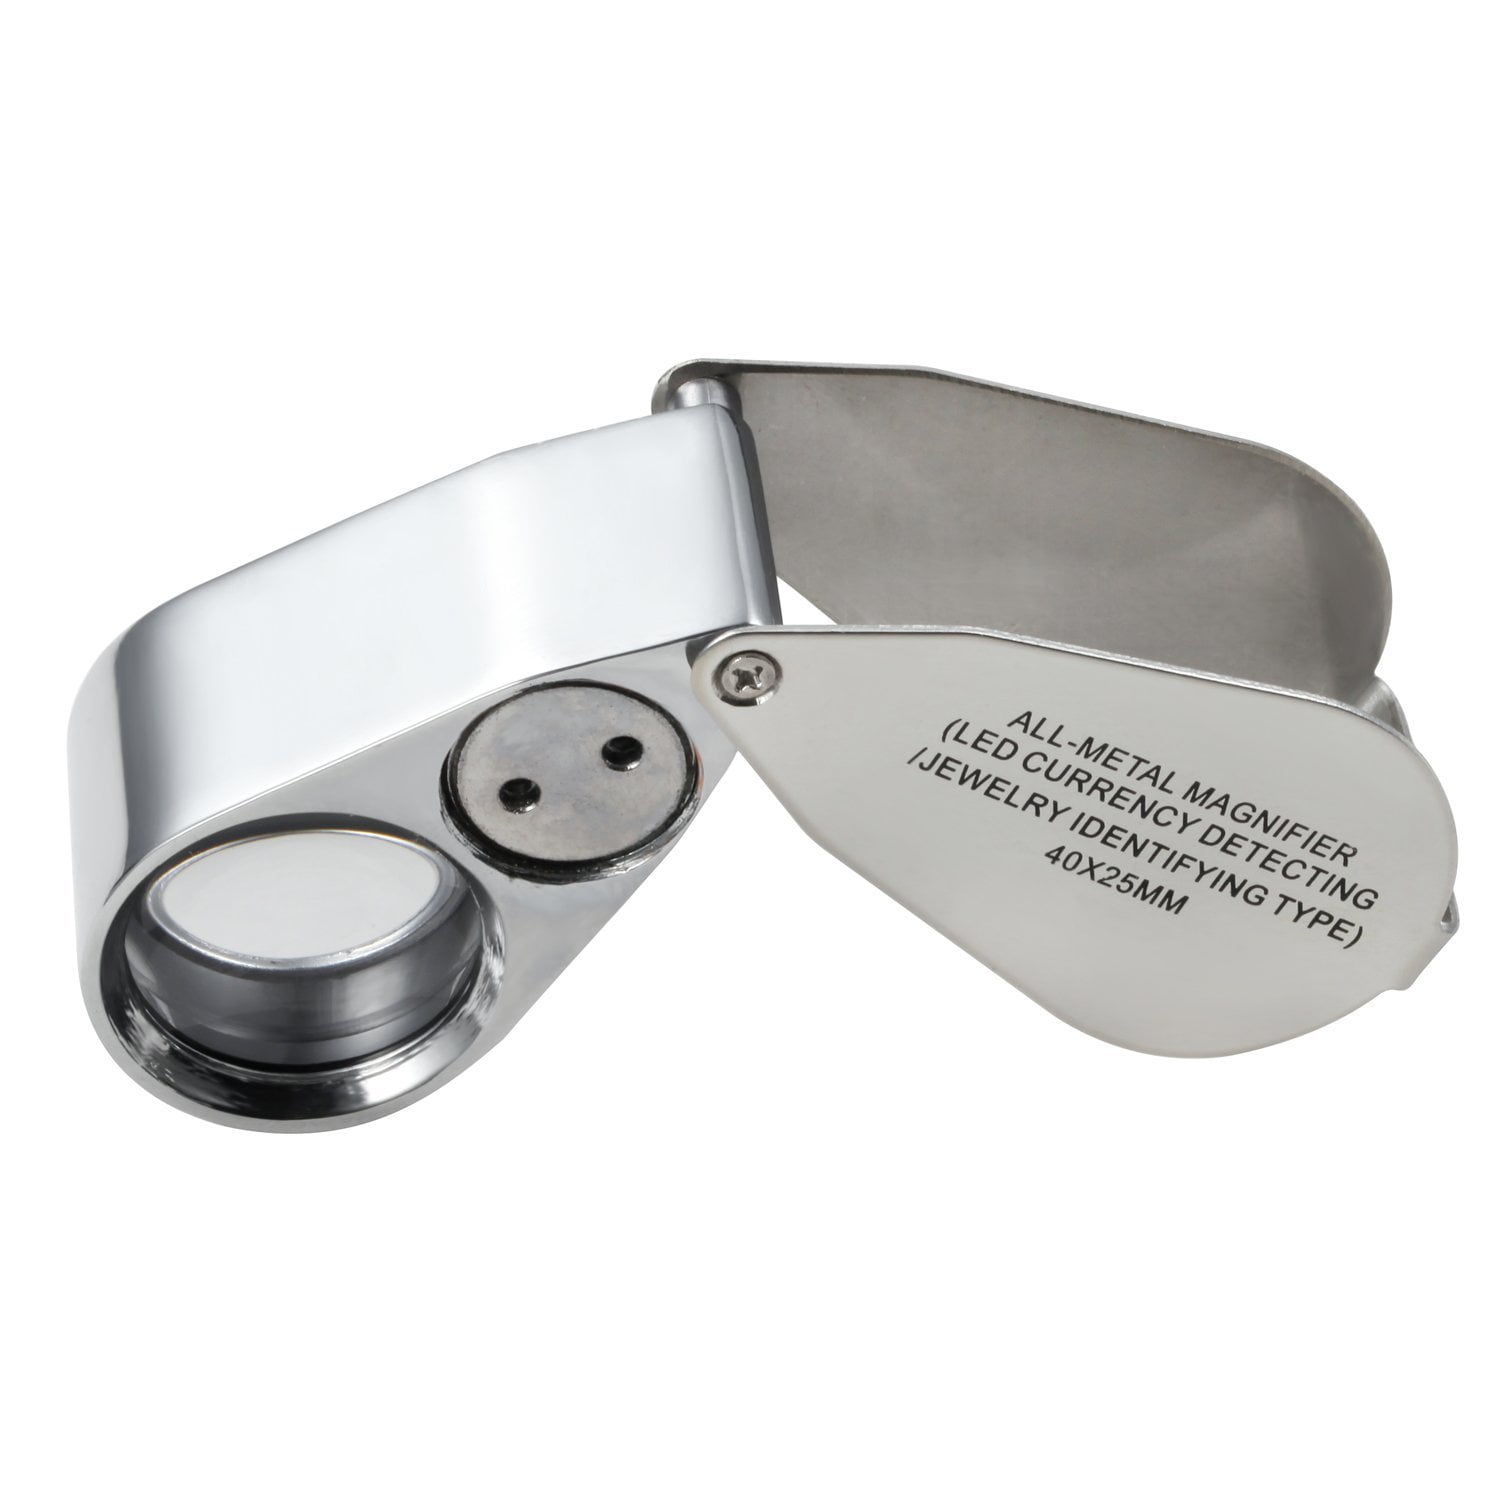 40X Jewelry Loupe Magnifier LED Light Magnifying Glass Jeweler Eye Scope Vintage 